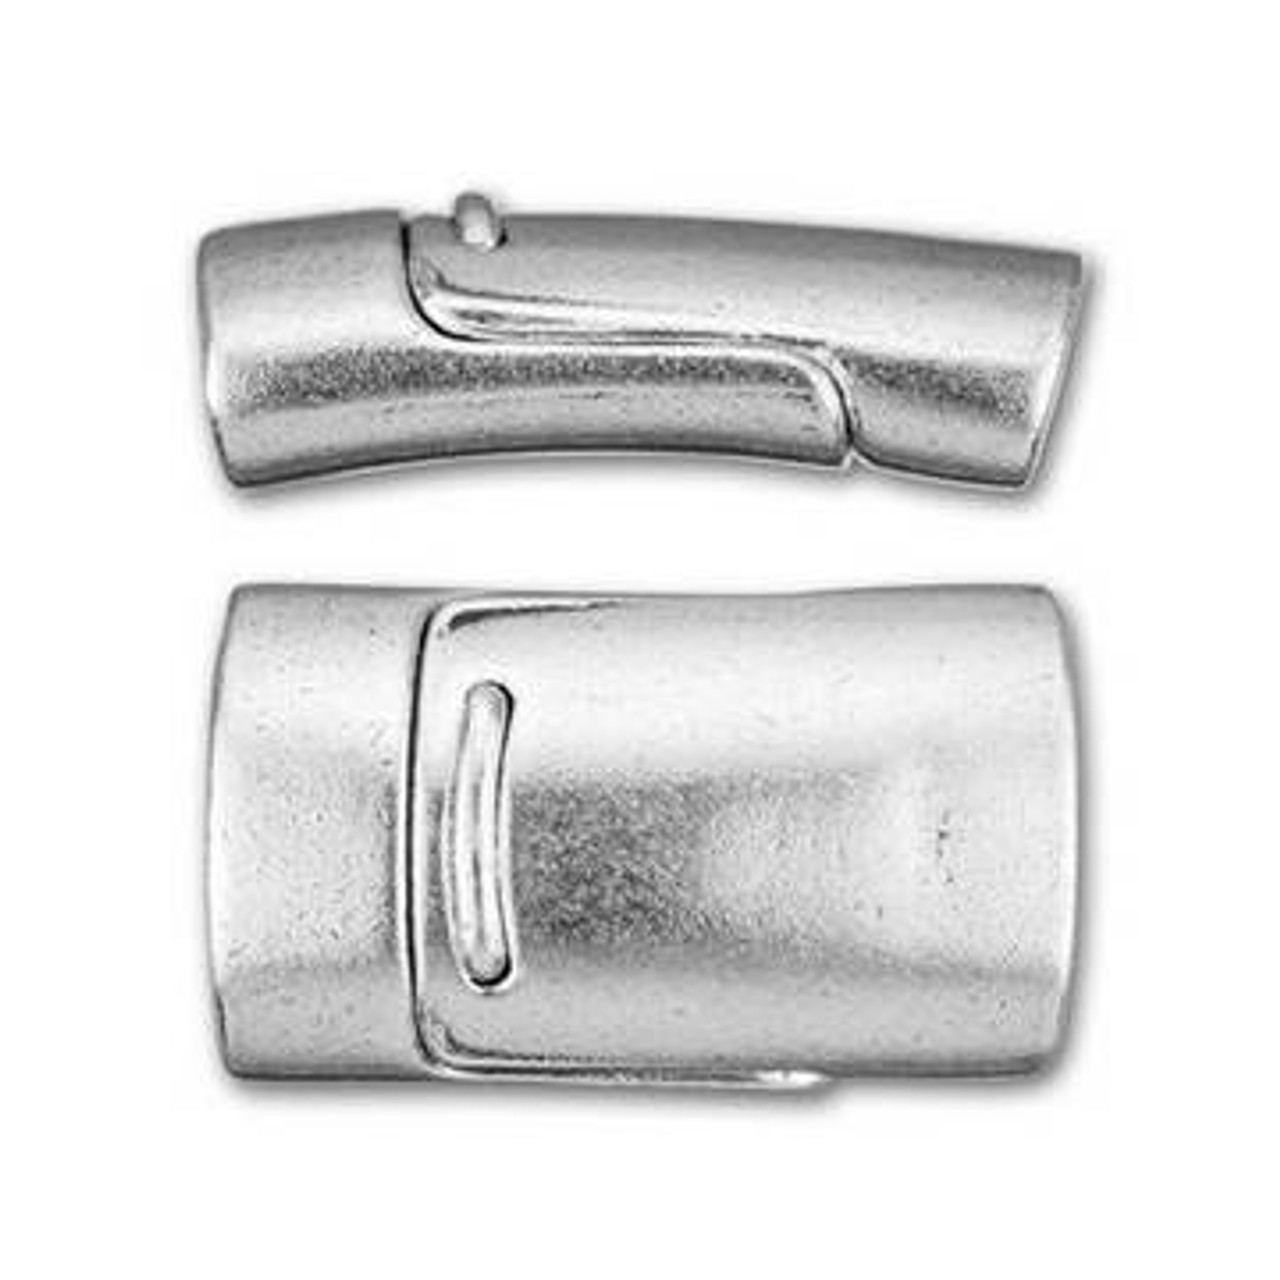 Silver color Bra magnetic clasp